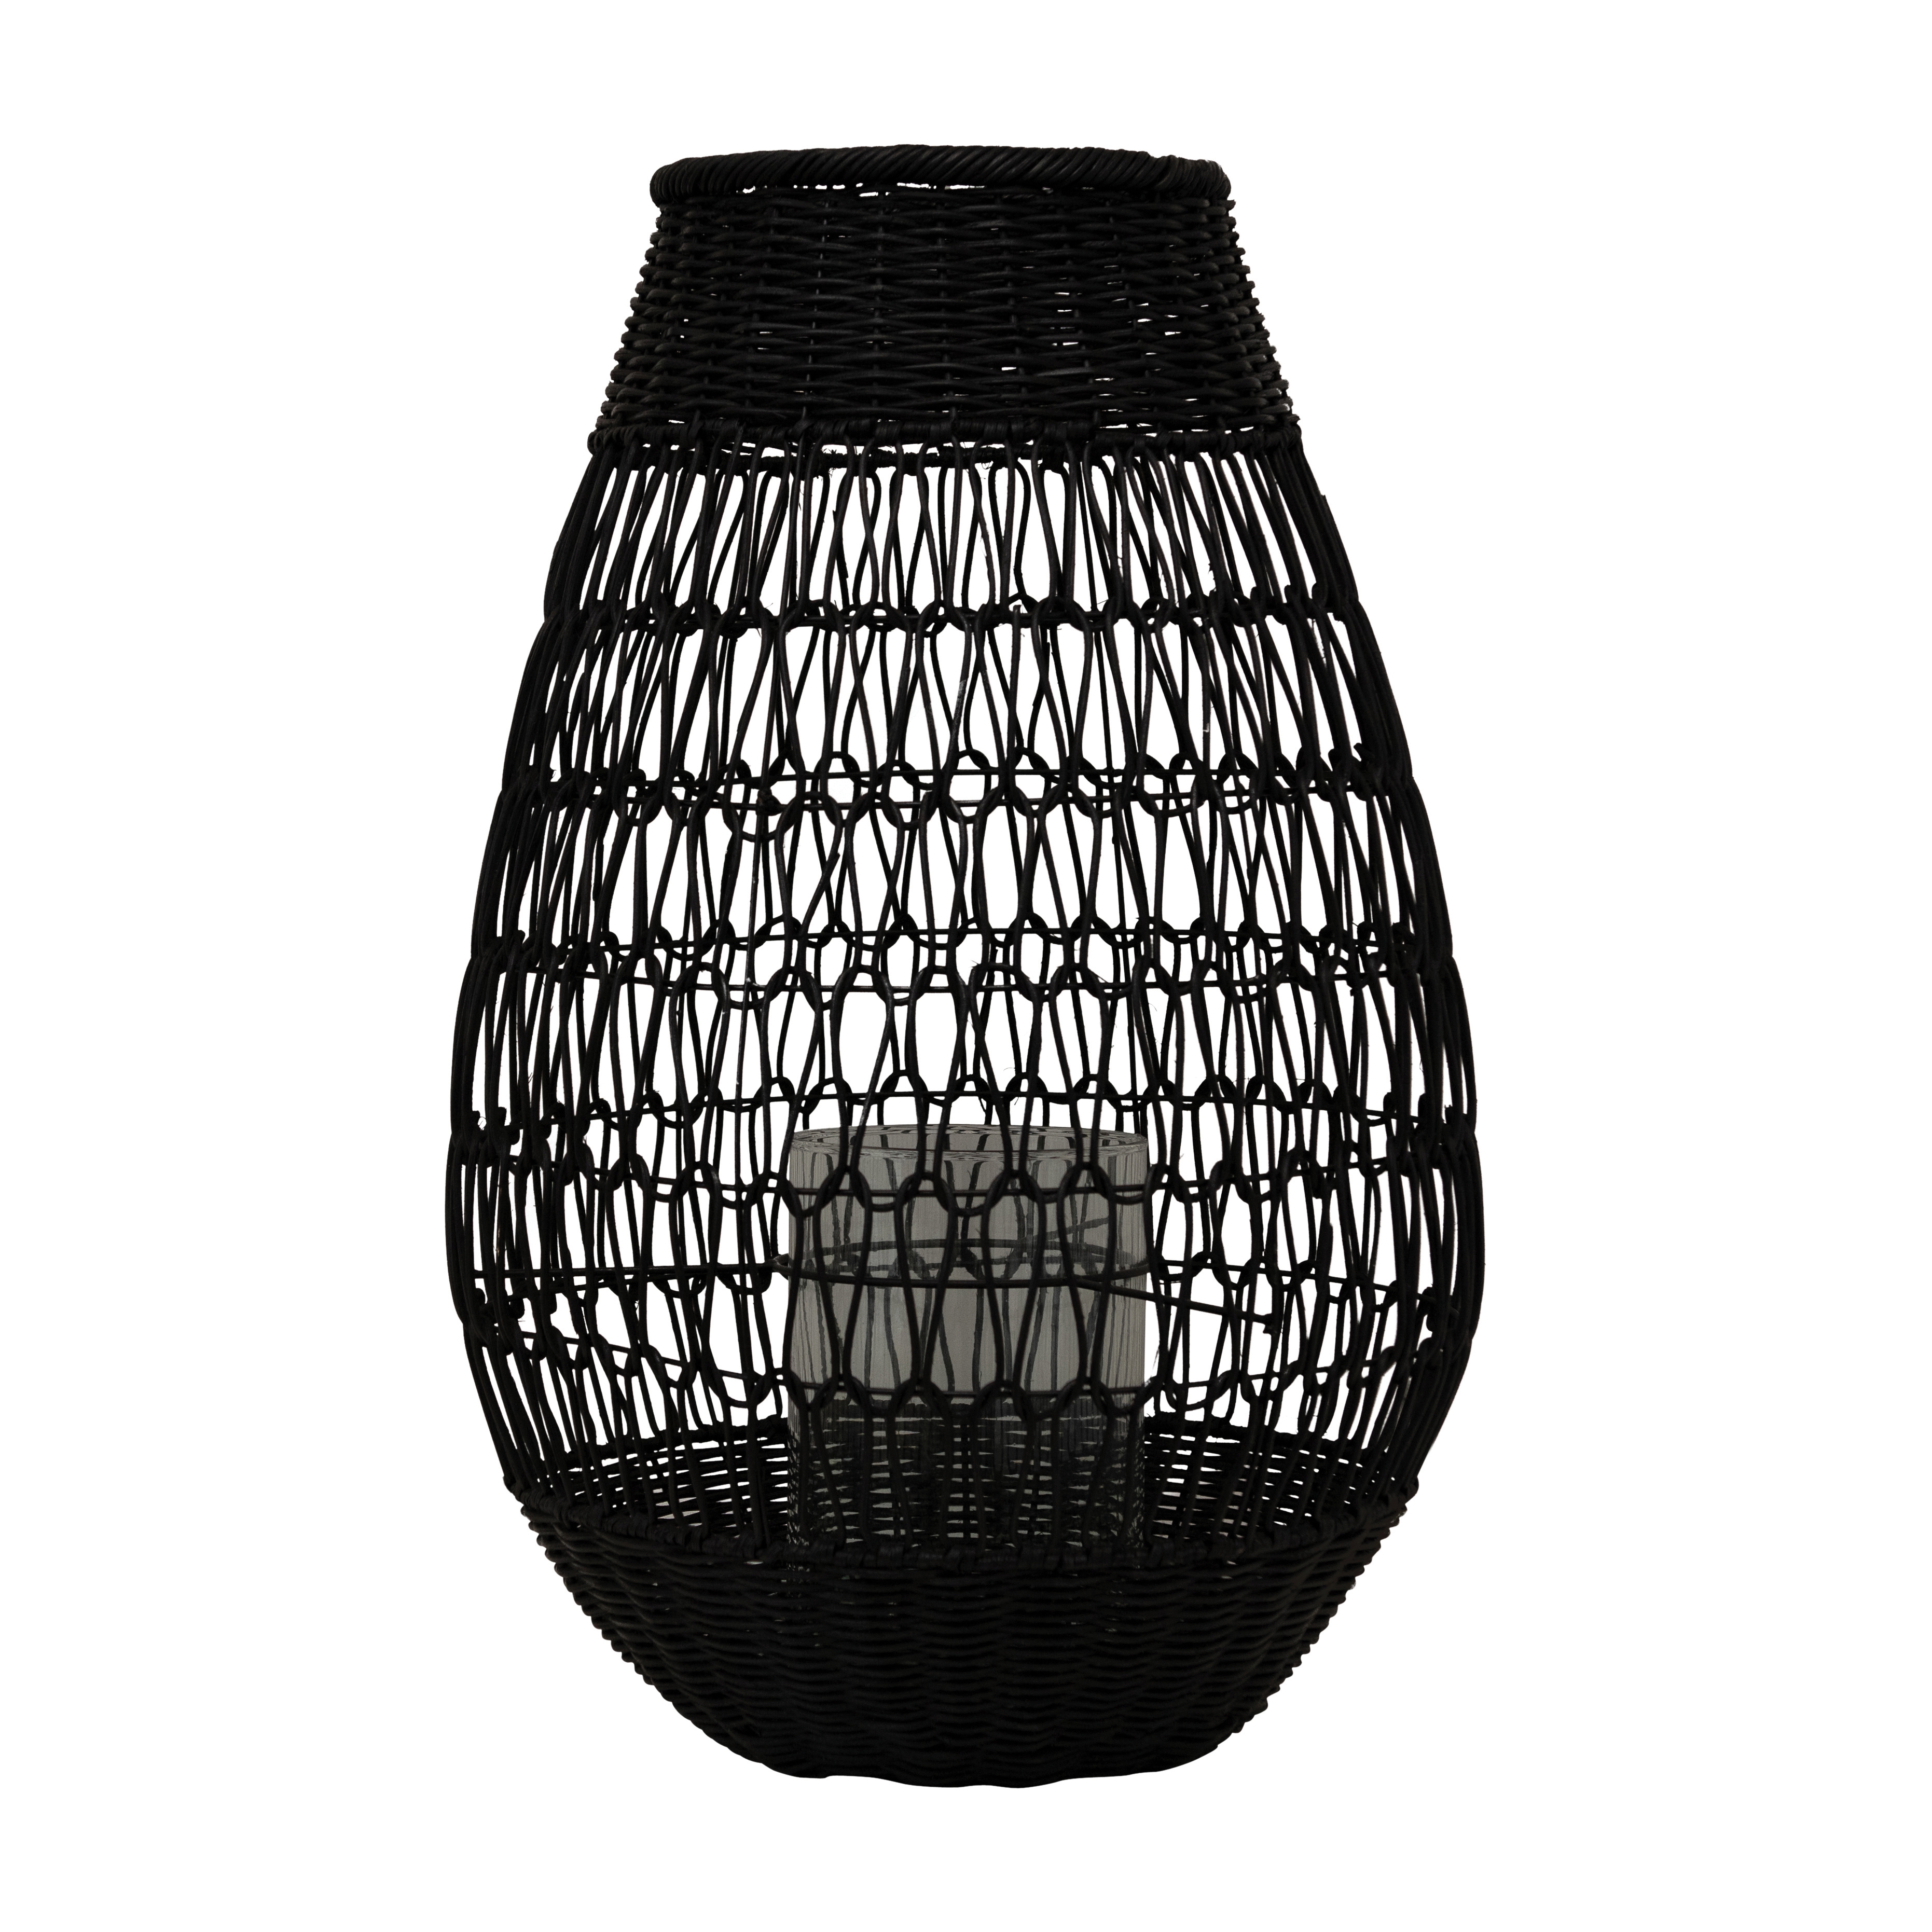 Rattan Lantern with Glass Insert, Black - Image 0